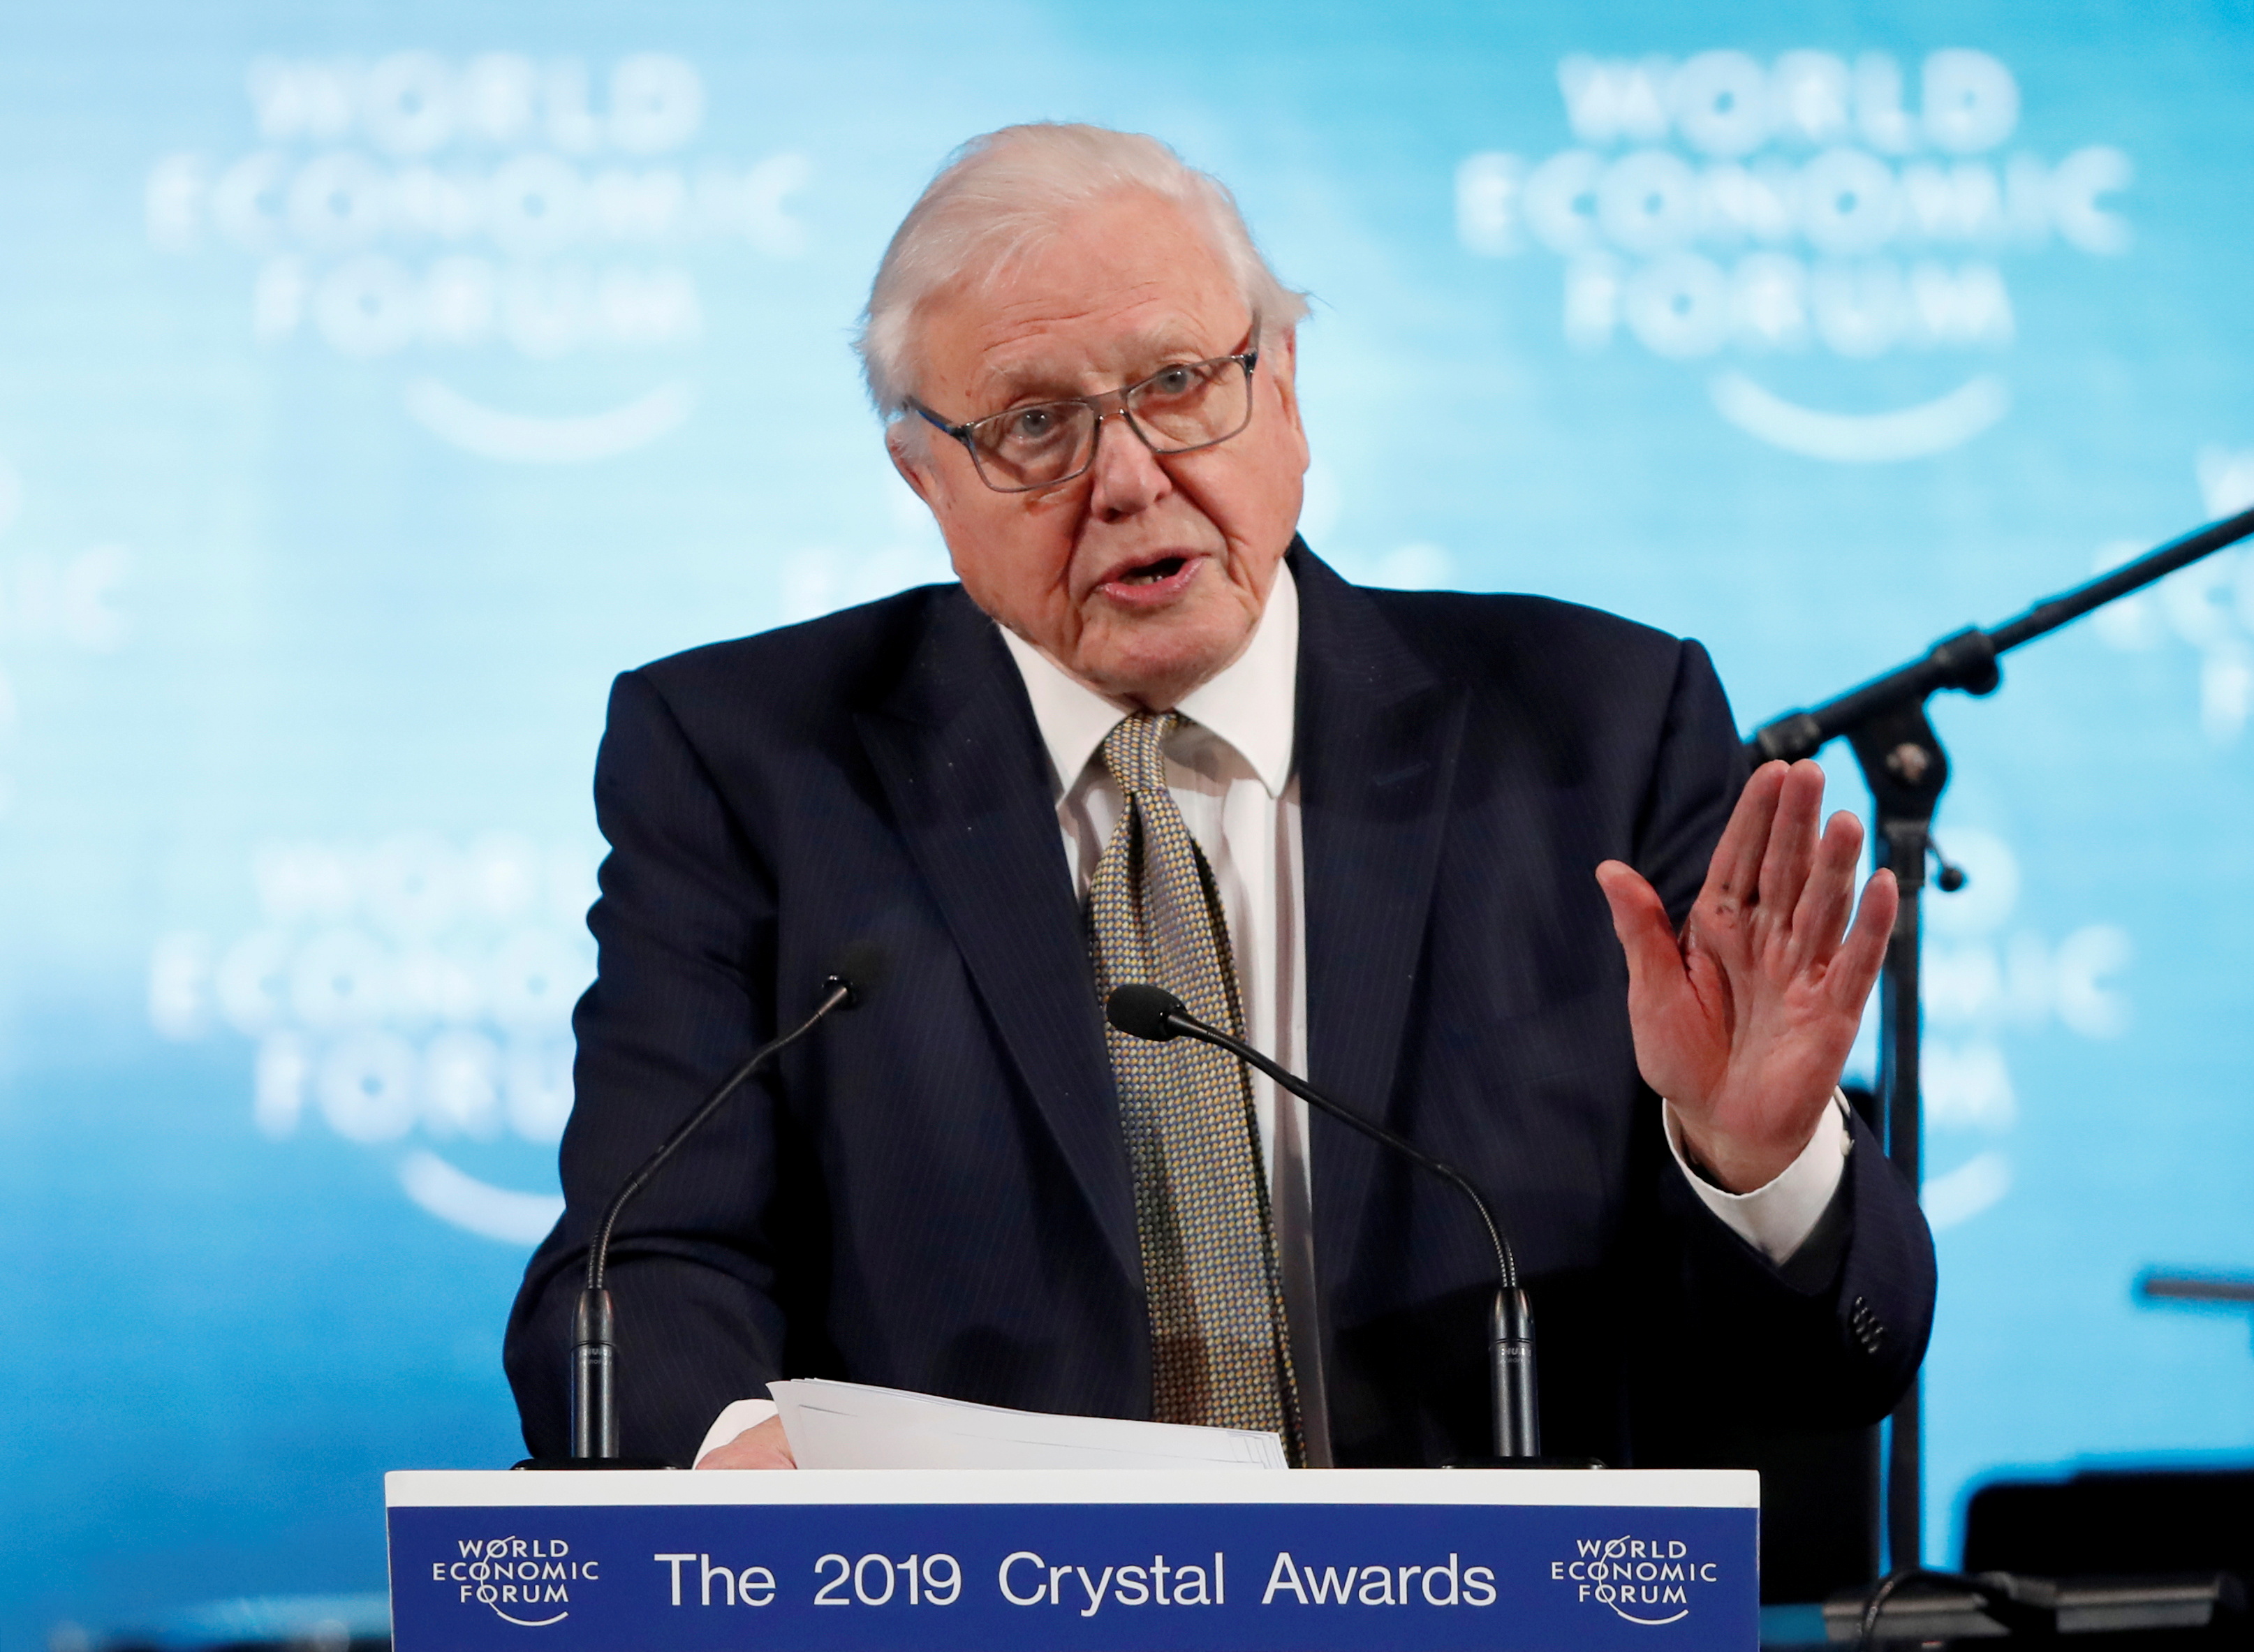 Opening ceremony of the 2019 World Economic Forum (WEF) in Davos